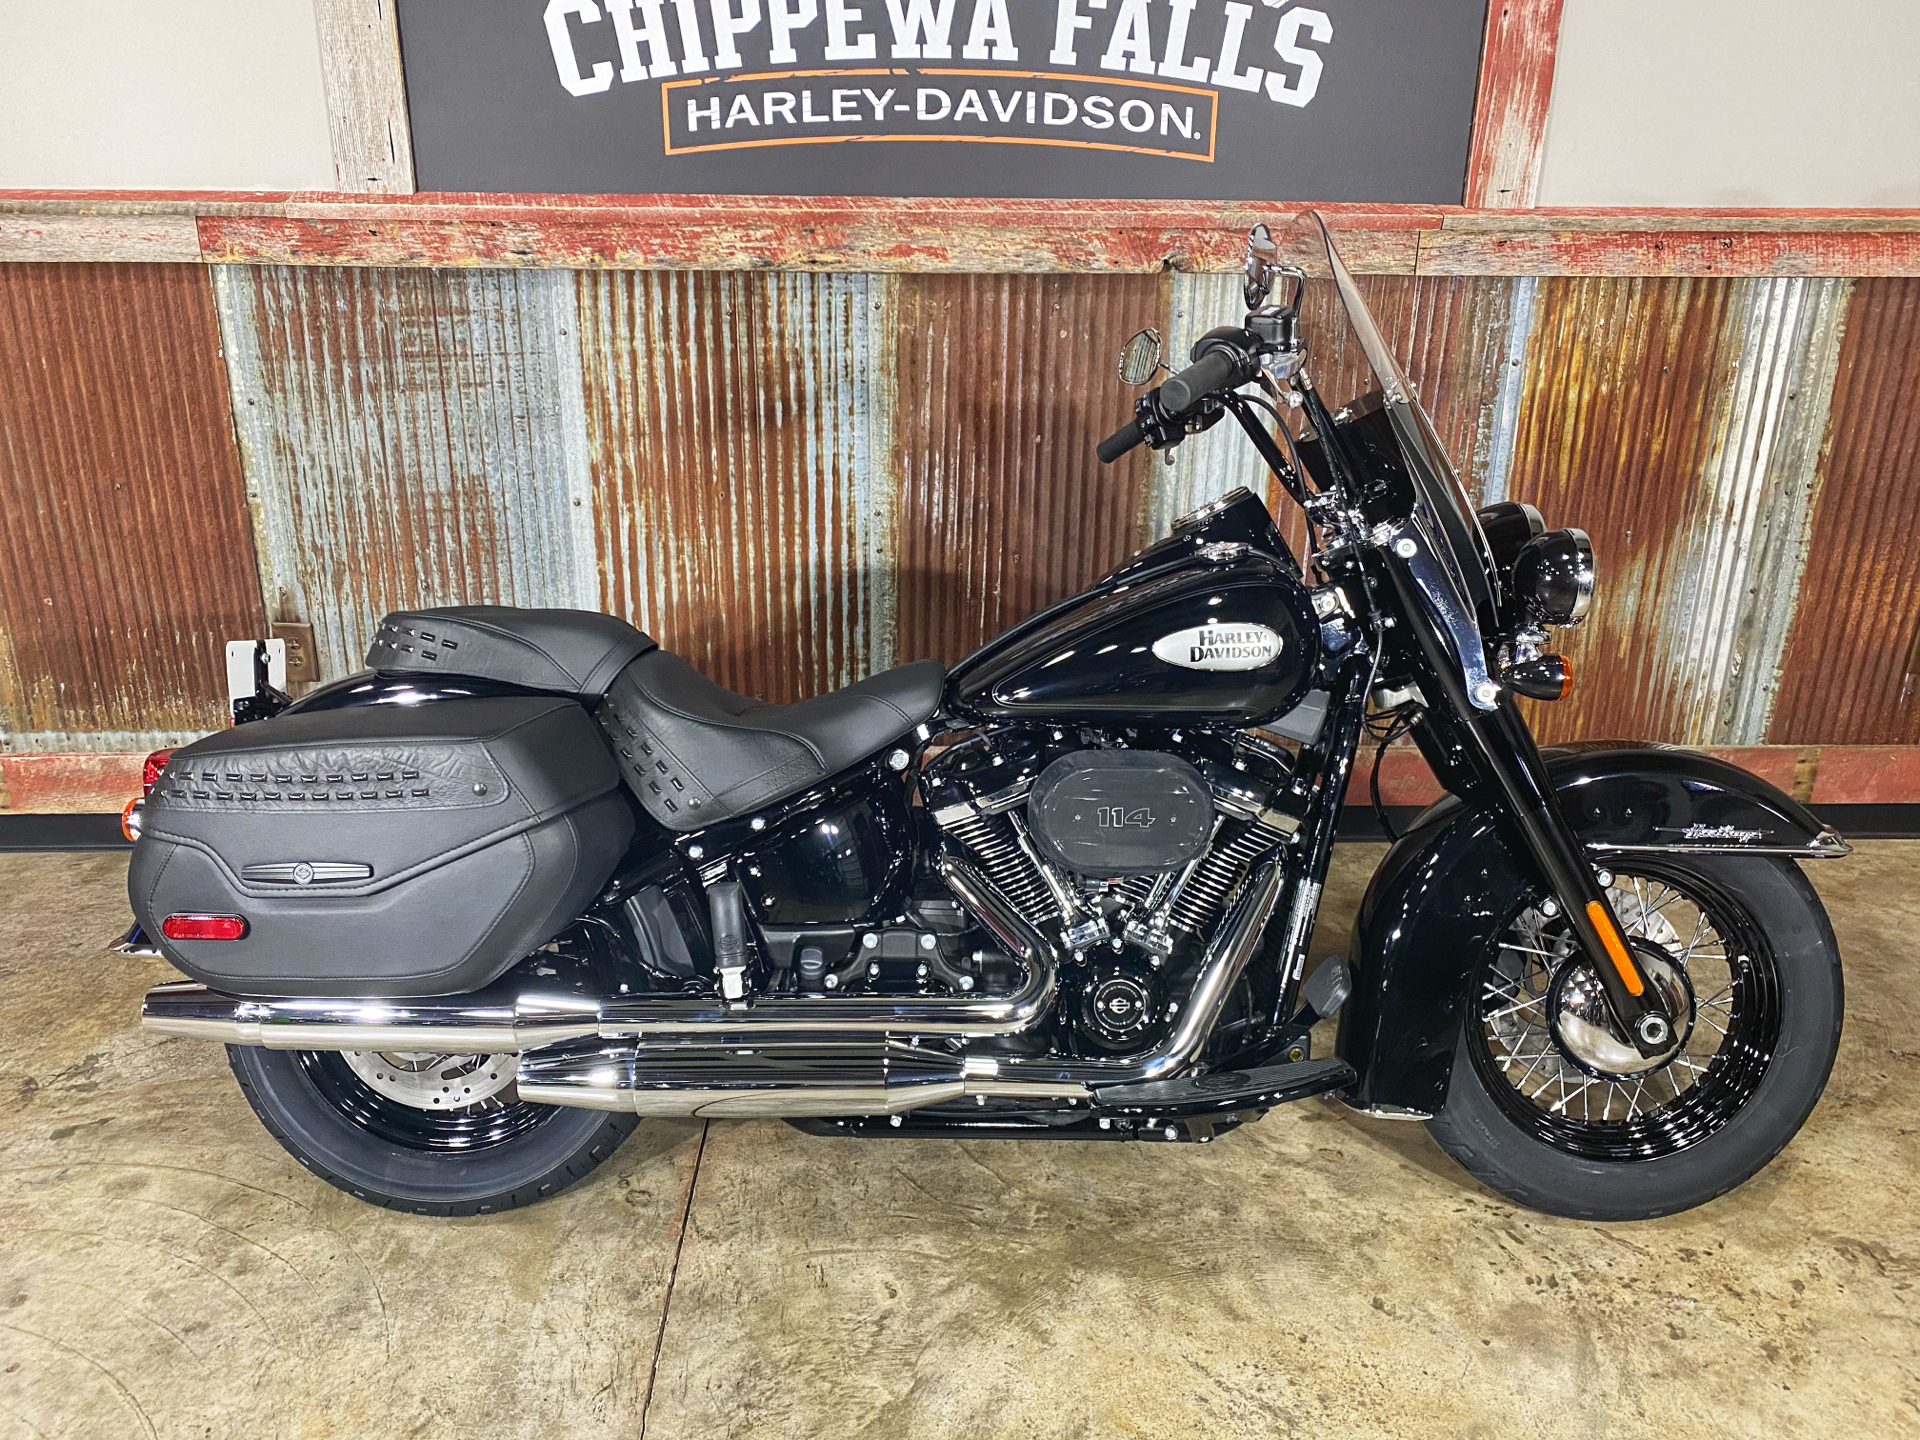 New 2021 Harley Davidson Heritage Classic 114 Vivid Black Motorcycles In Chippewa Falls Wi Fx024366